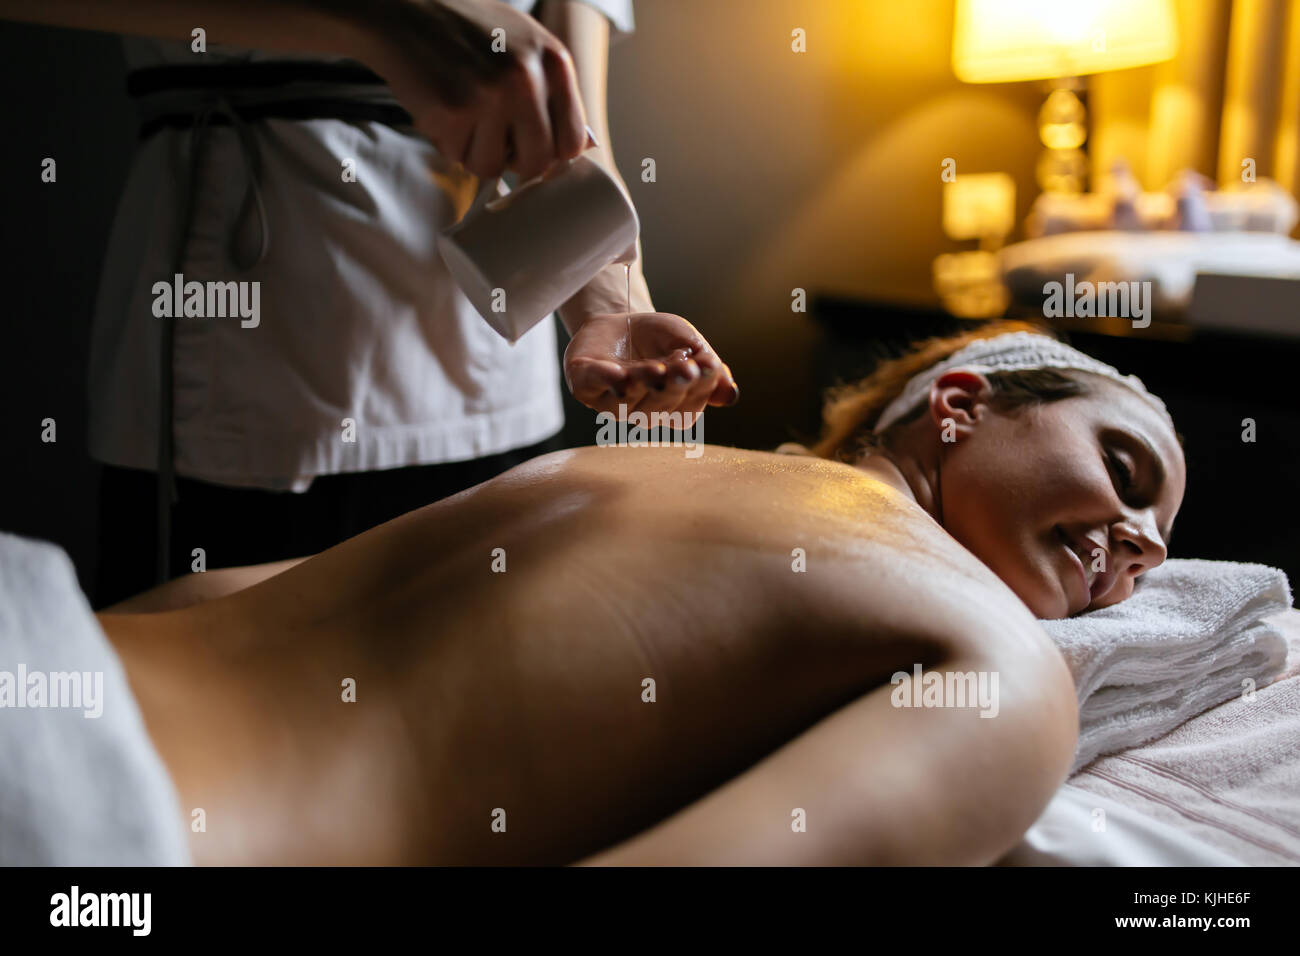 Oil massage treatment Stock Photo